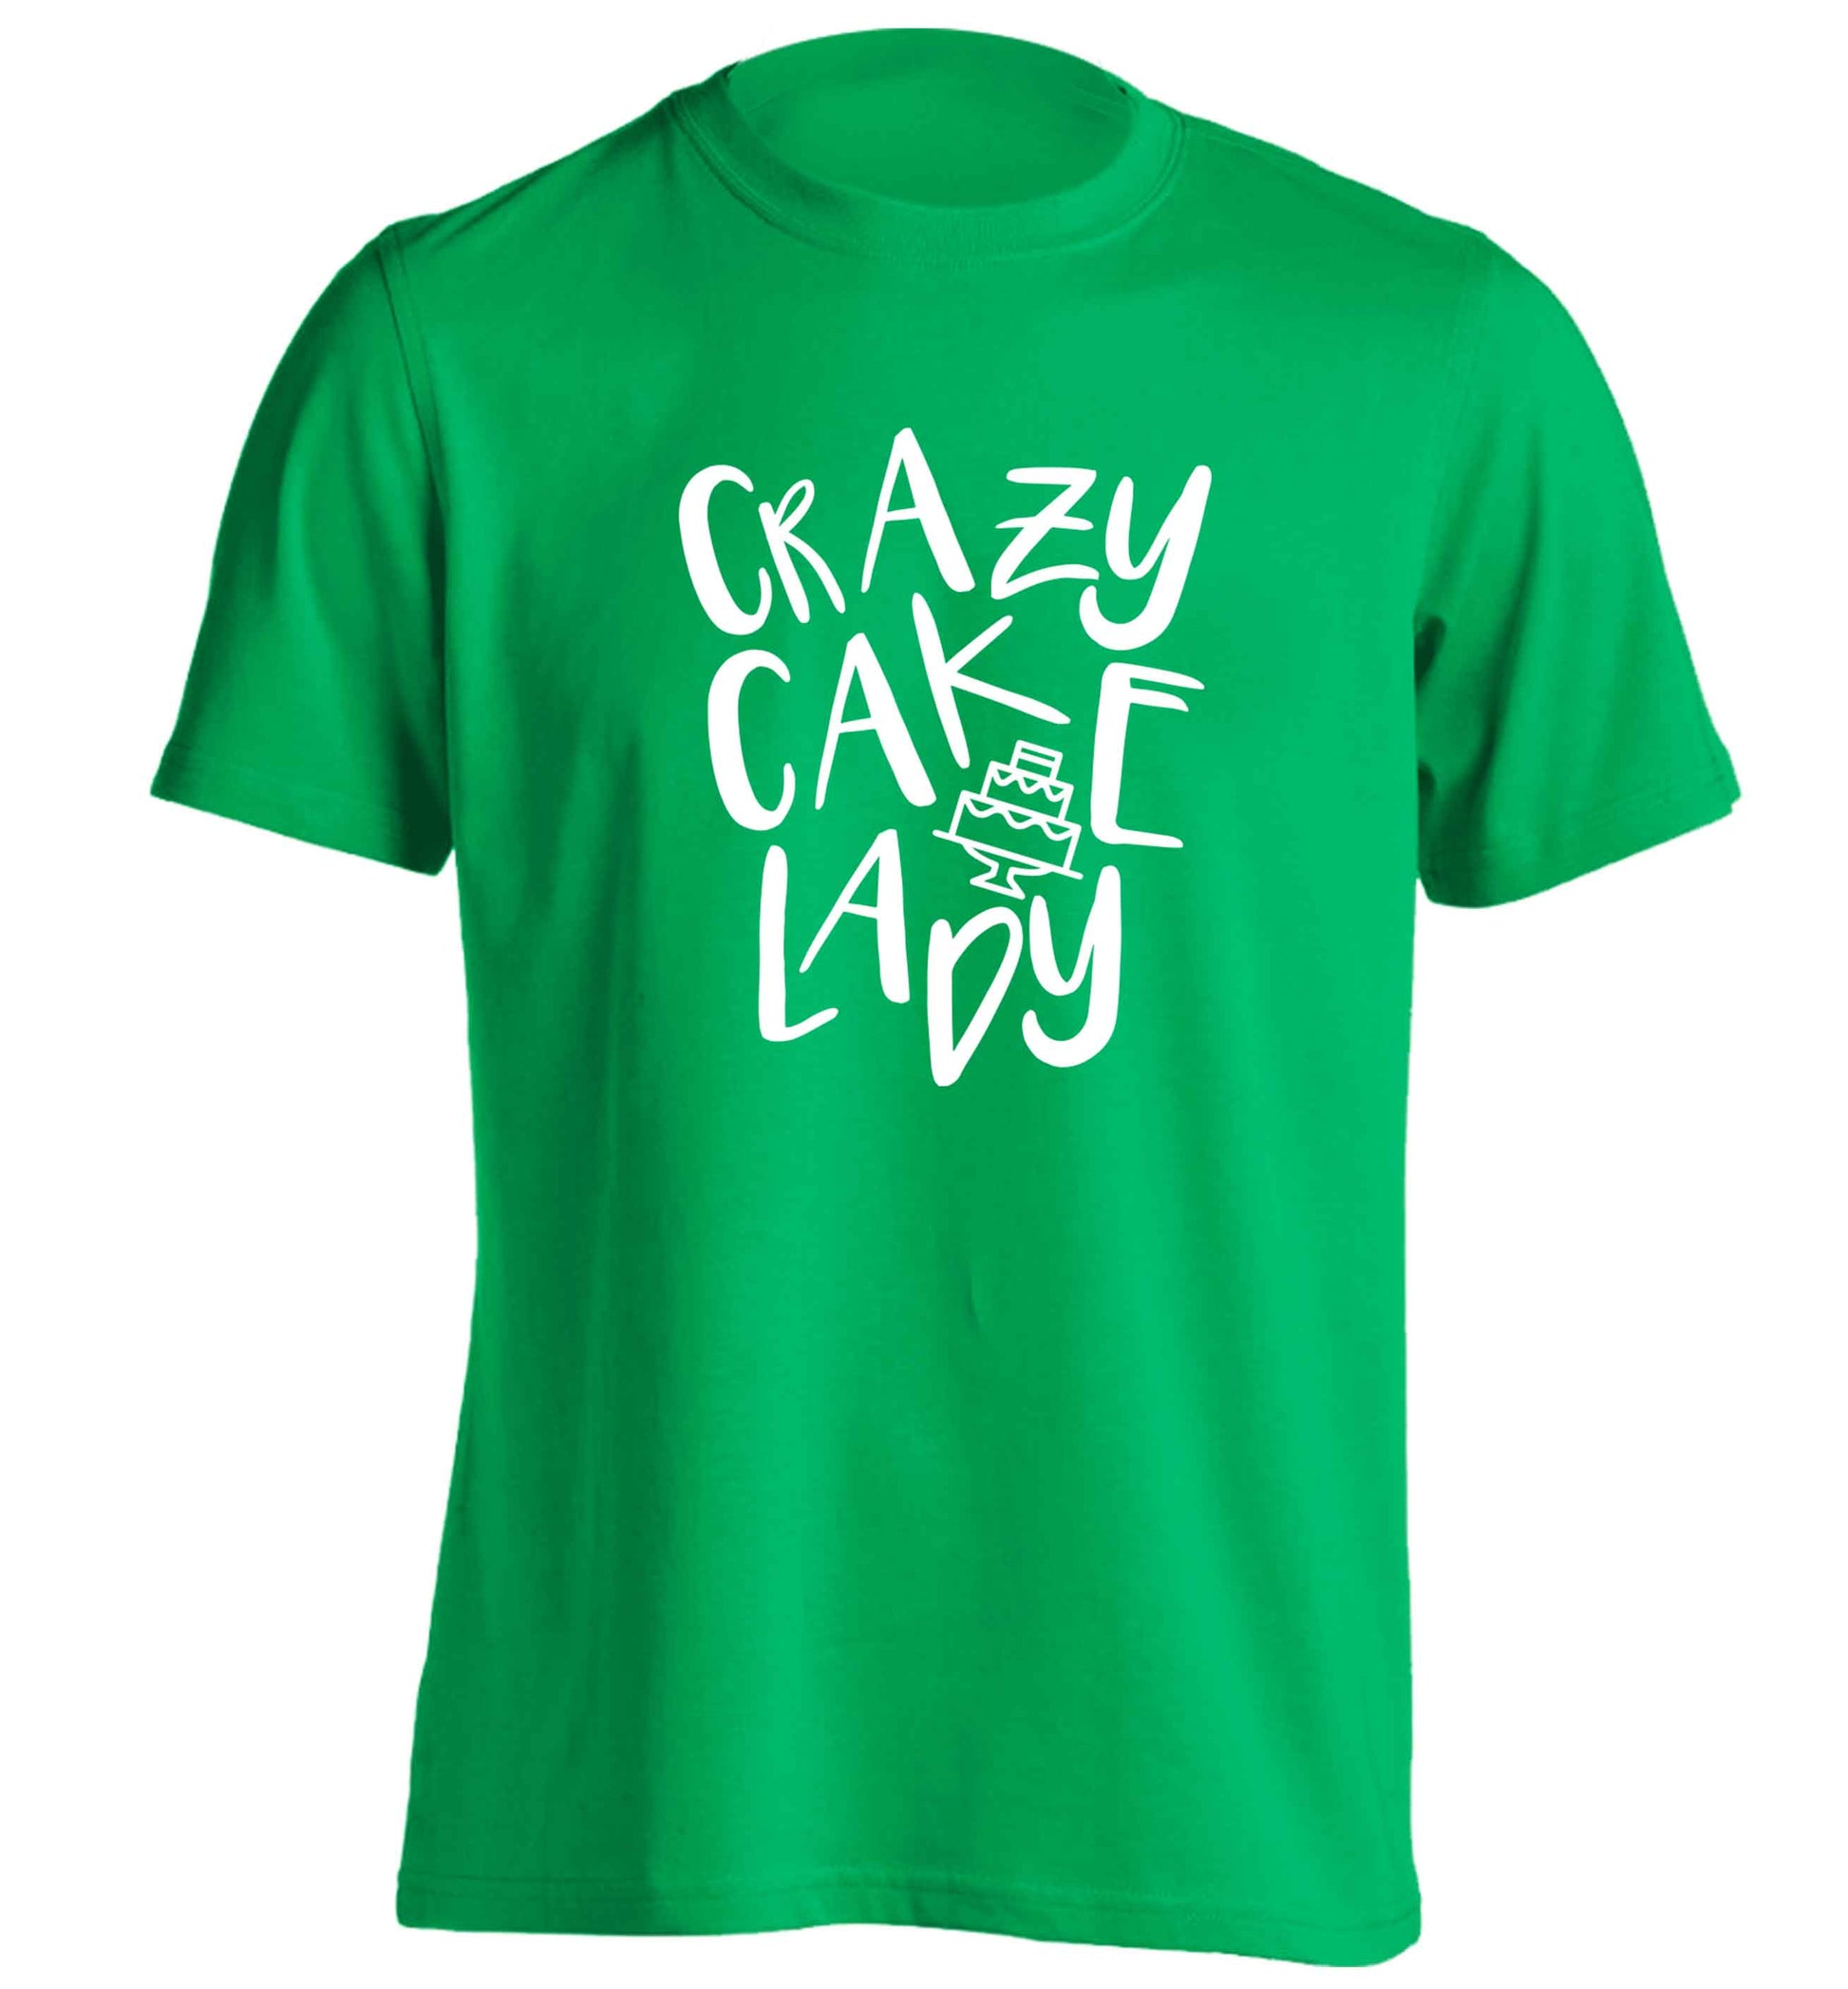 Crazy cake lady adults unisex green Tshirt 2XL